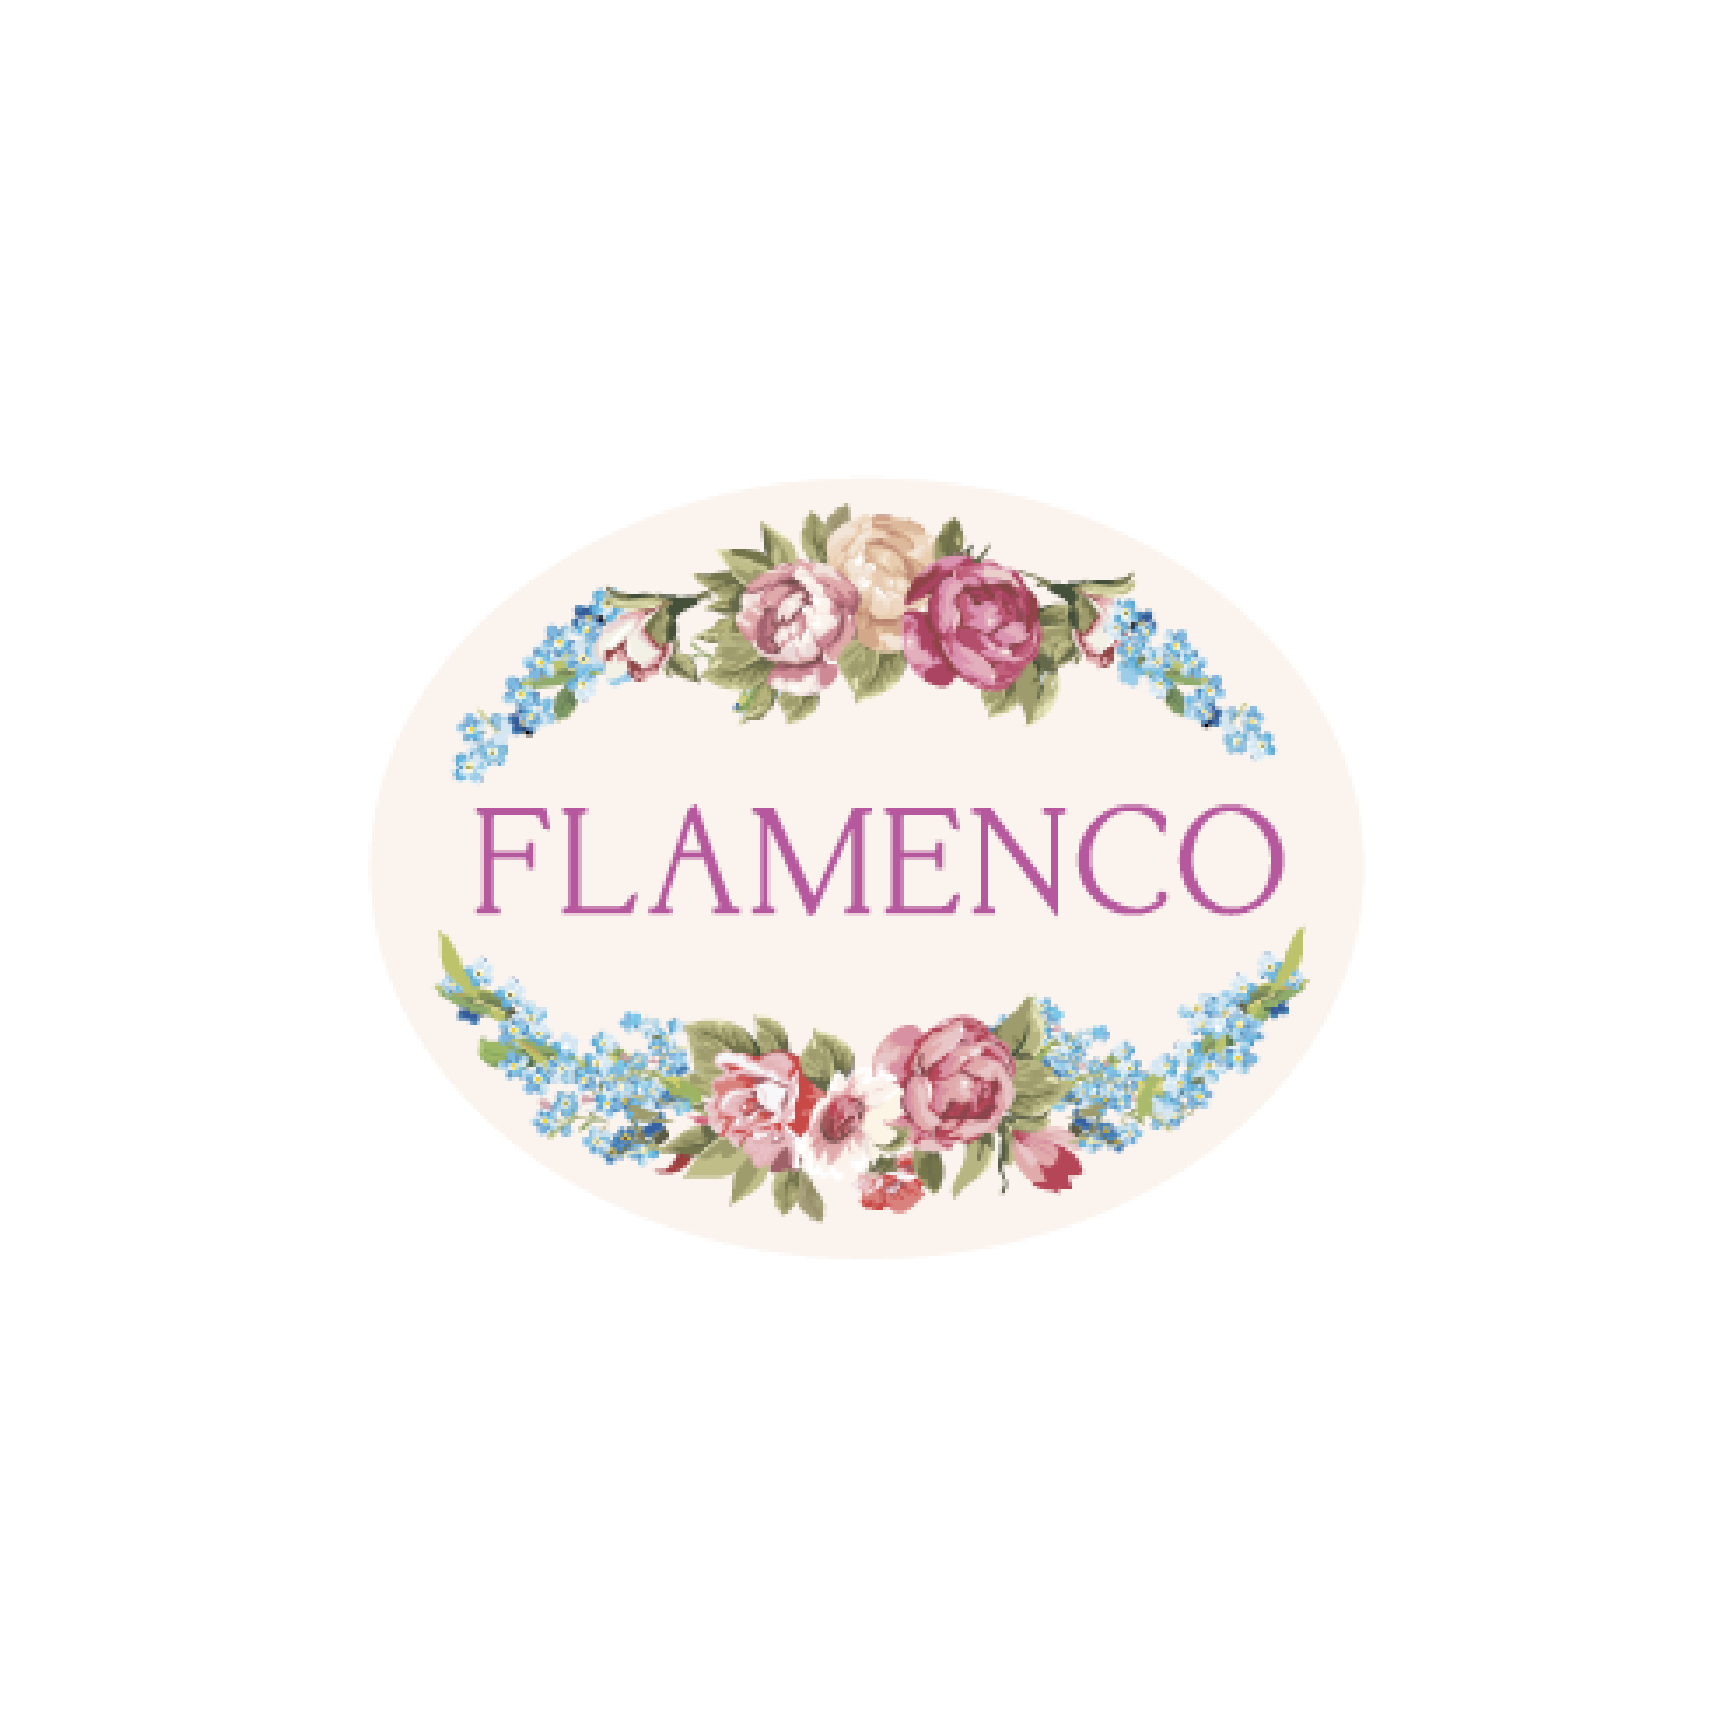 Flamenco Chic